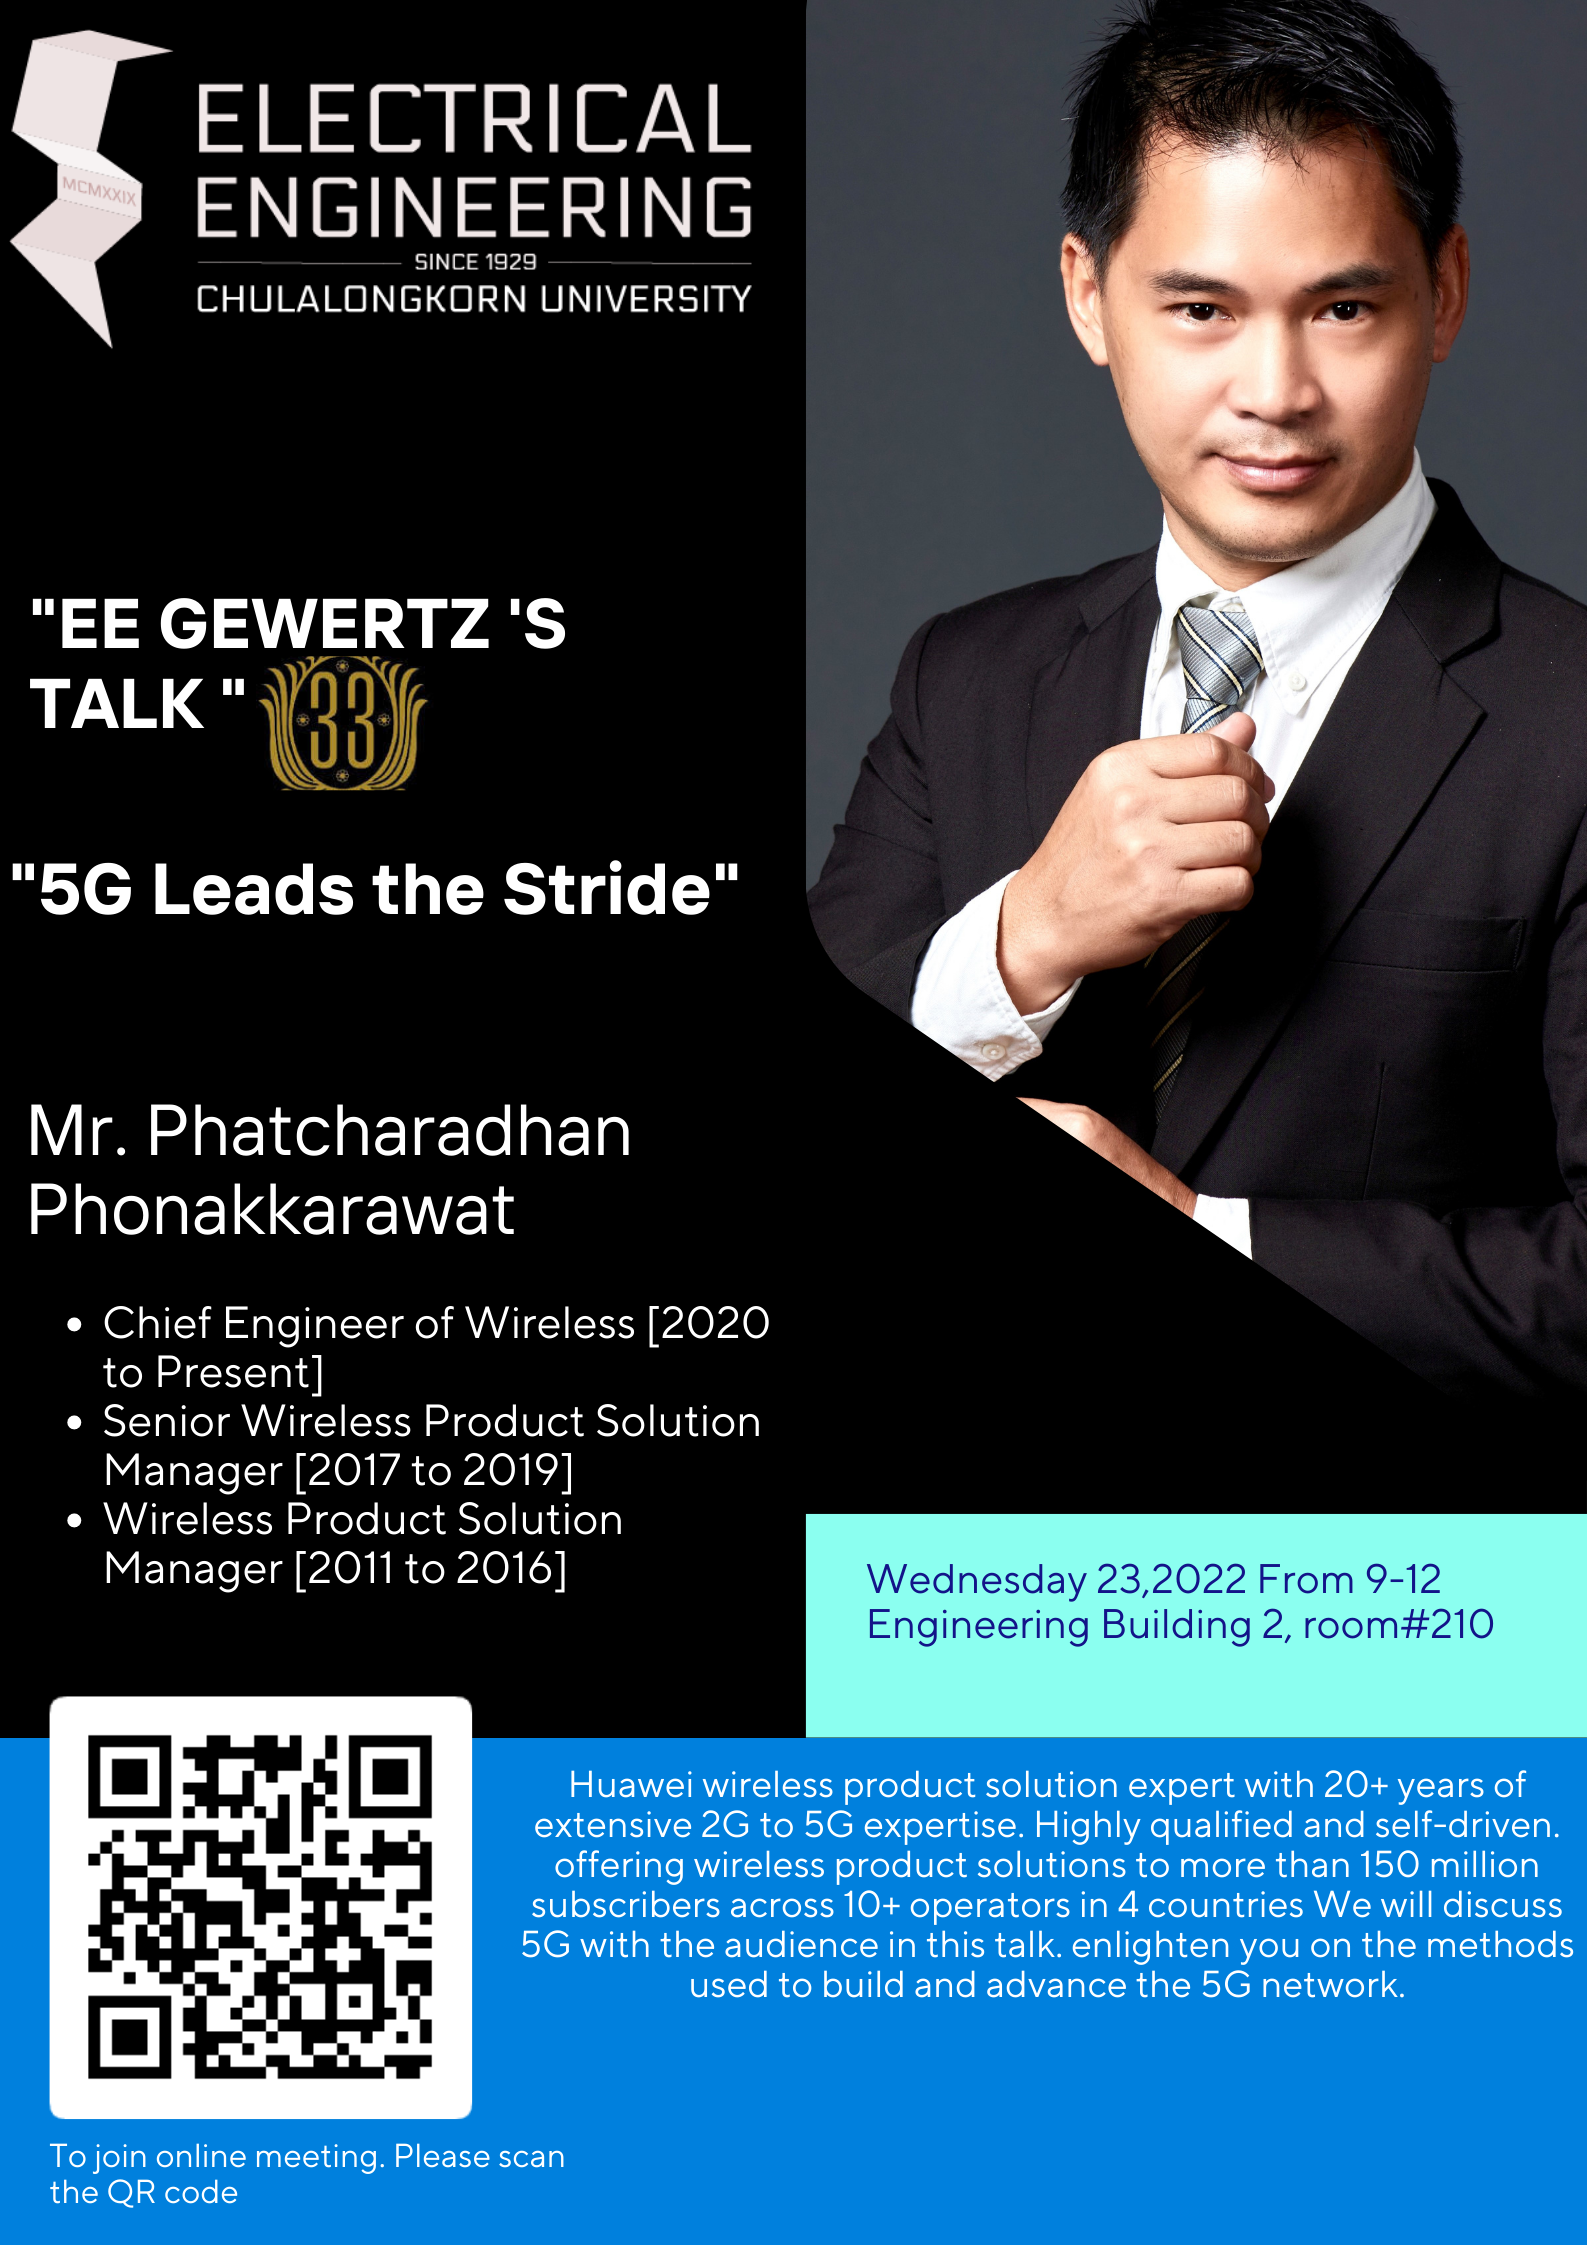 EE Gewert Talk 33 "5G Leads the Stride" on Wednesday, Nov 23, 9 am -12 pm room 210 Engineering building 2